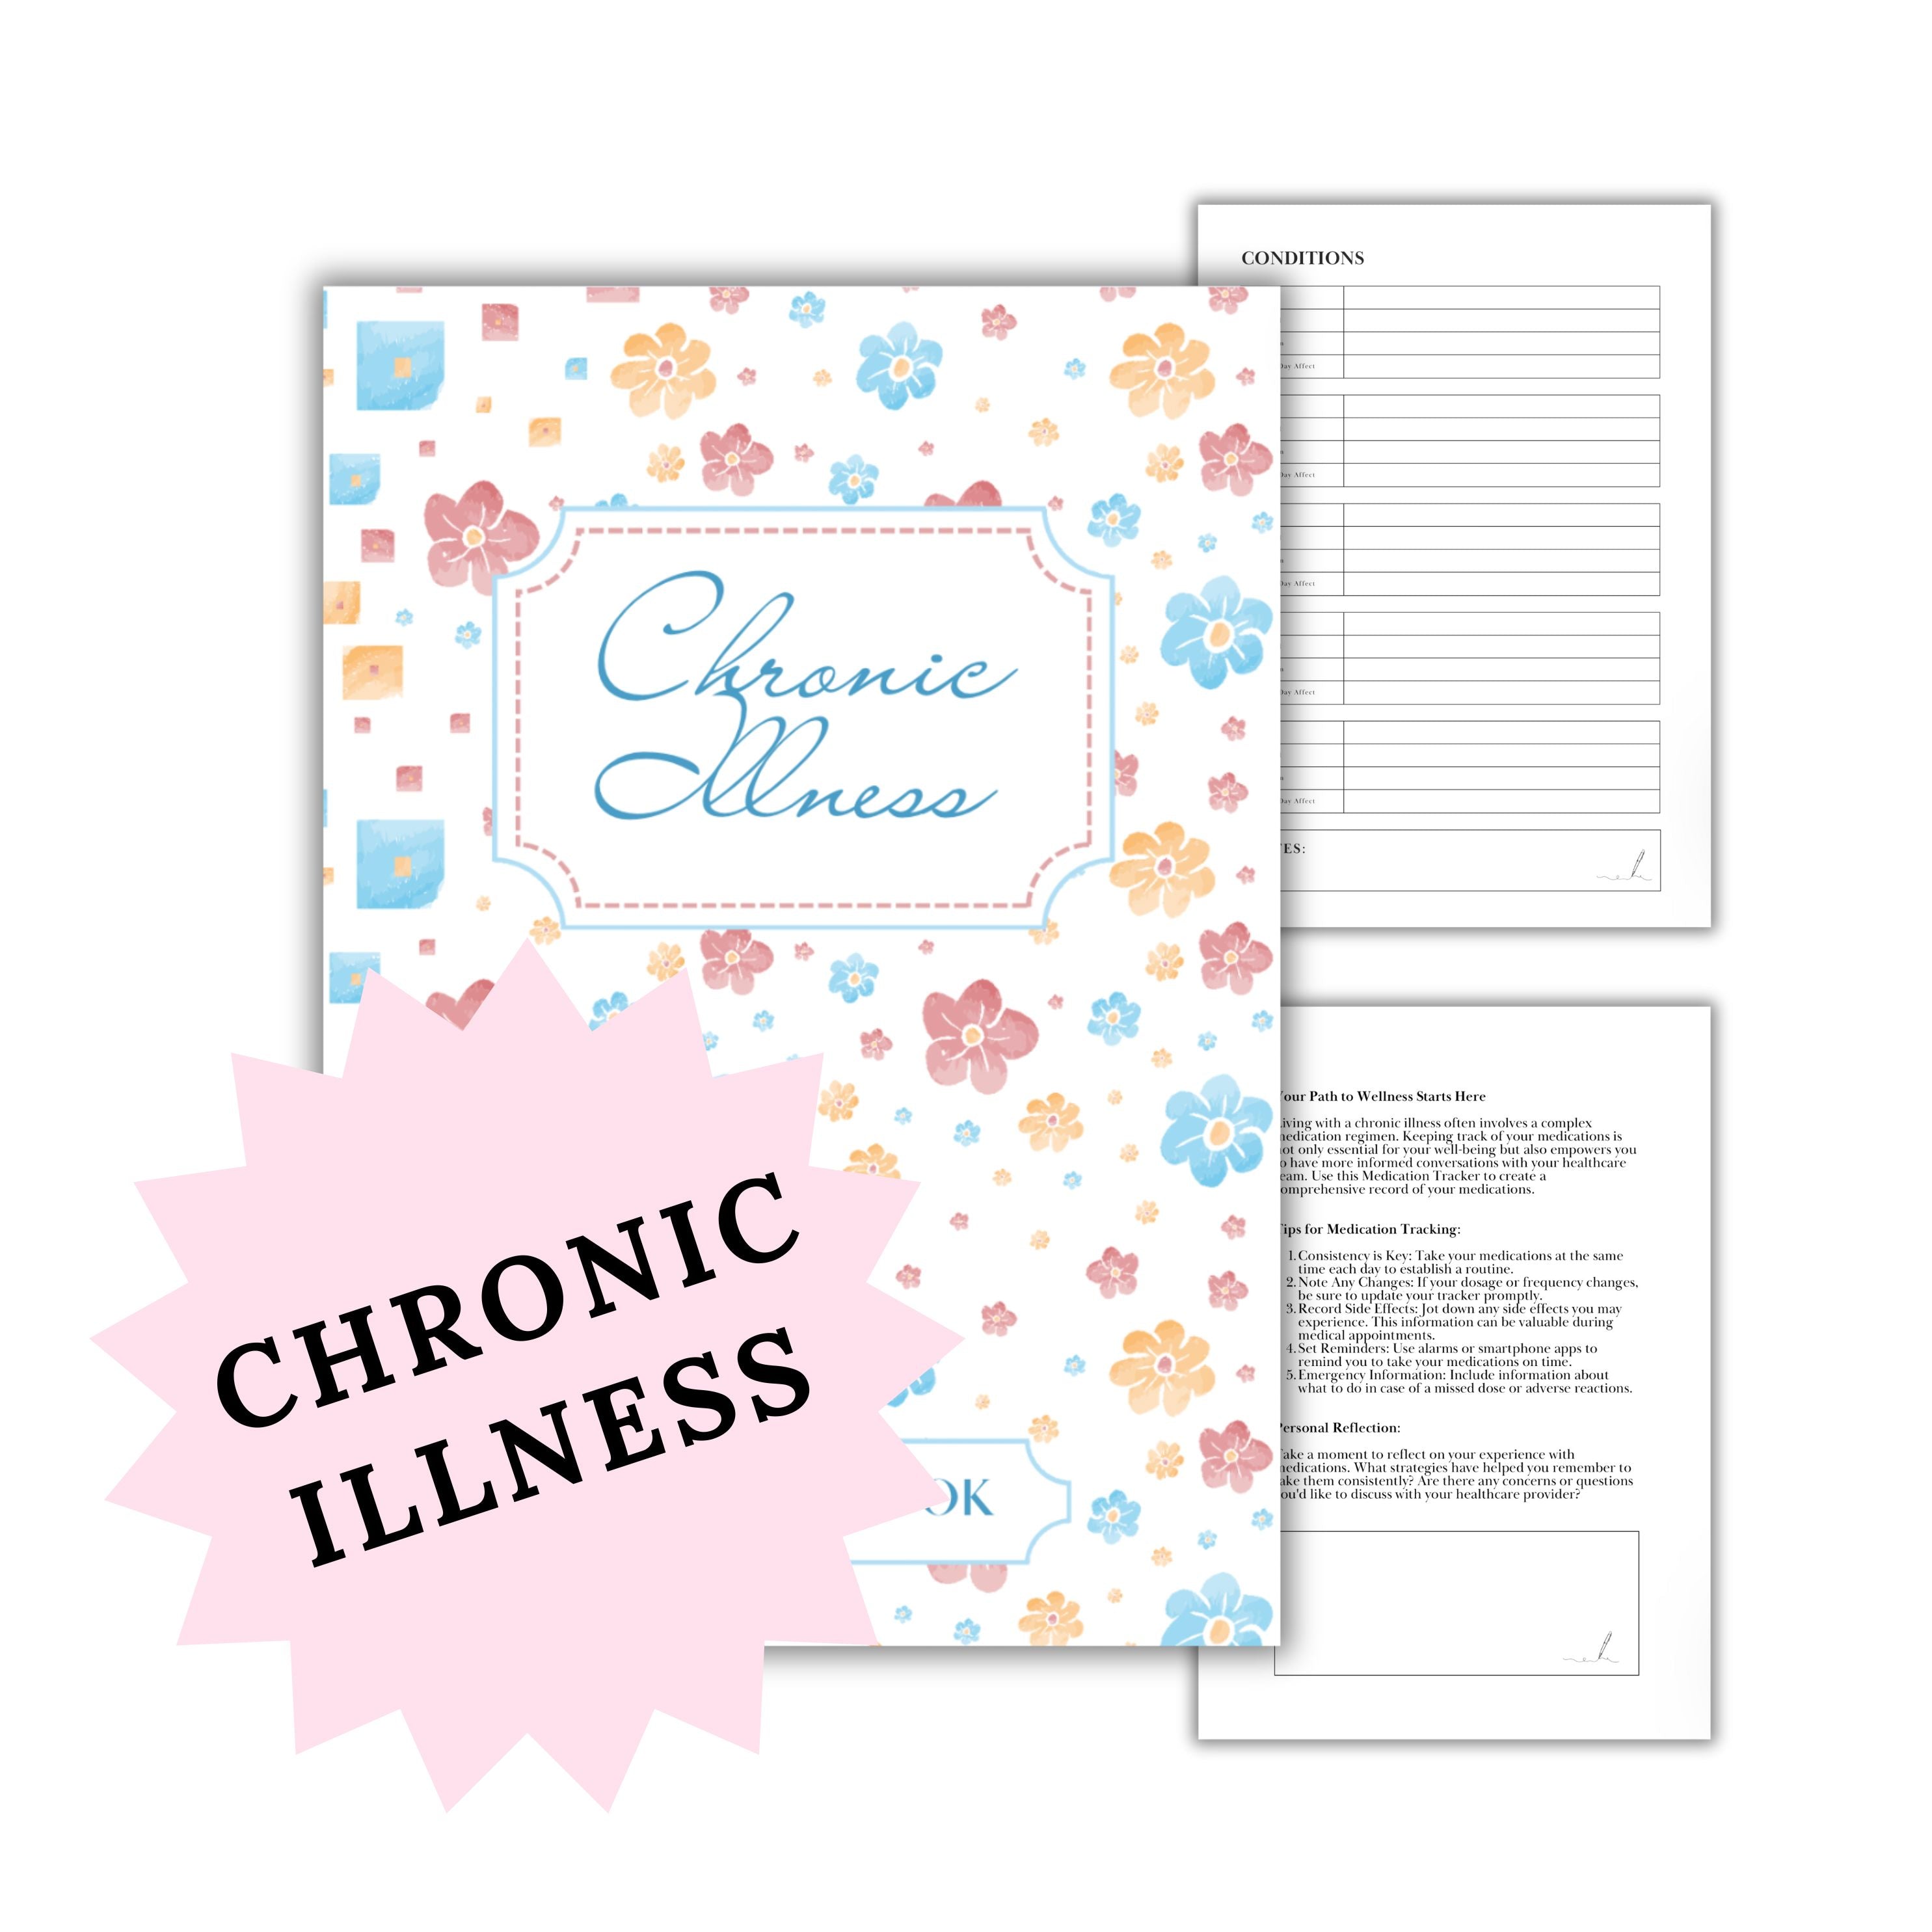 Chronic Illness Support Information Workbook Digital Download